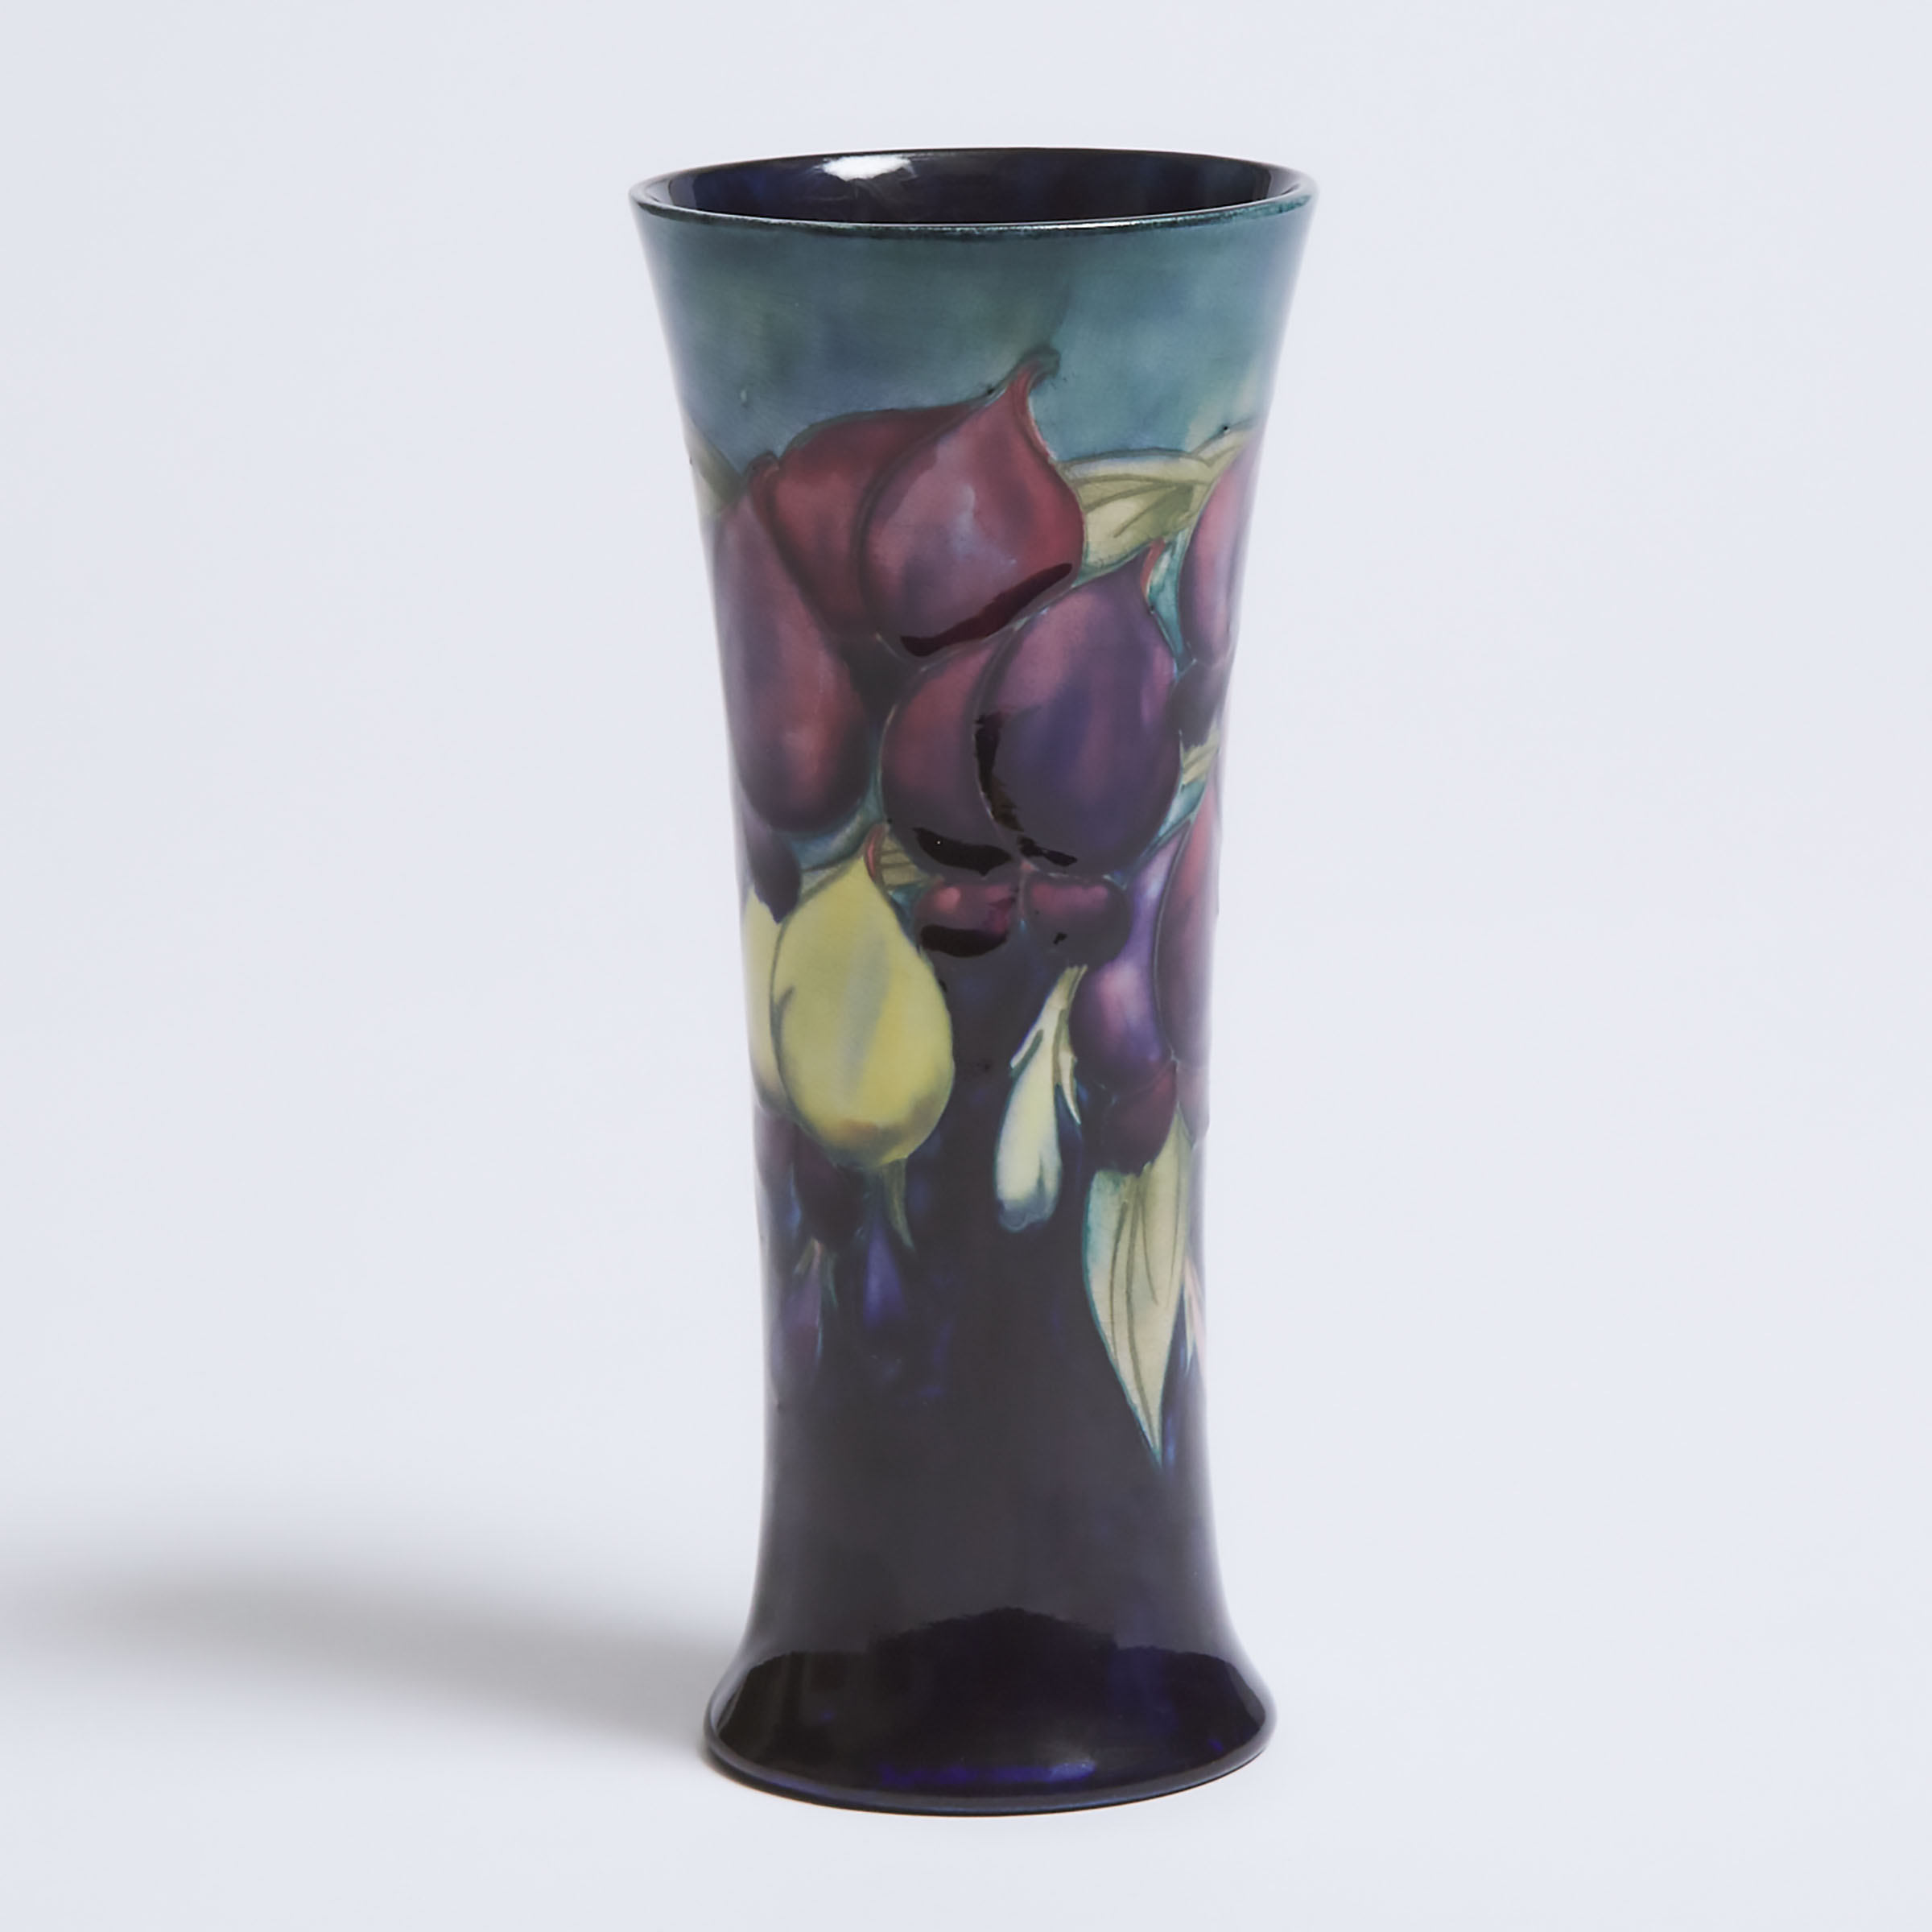 Moorcroft Wisteria Vase, c.1916-18